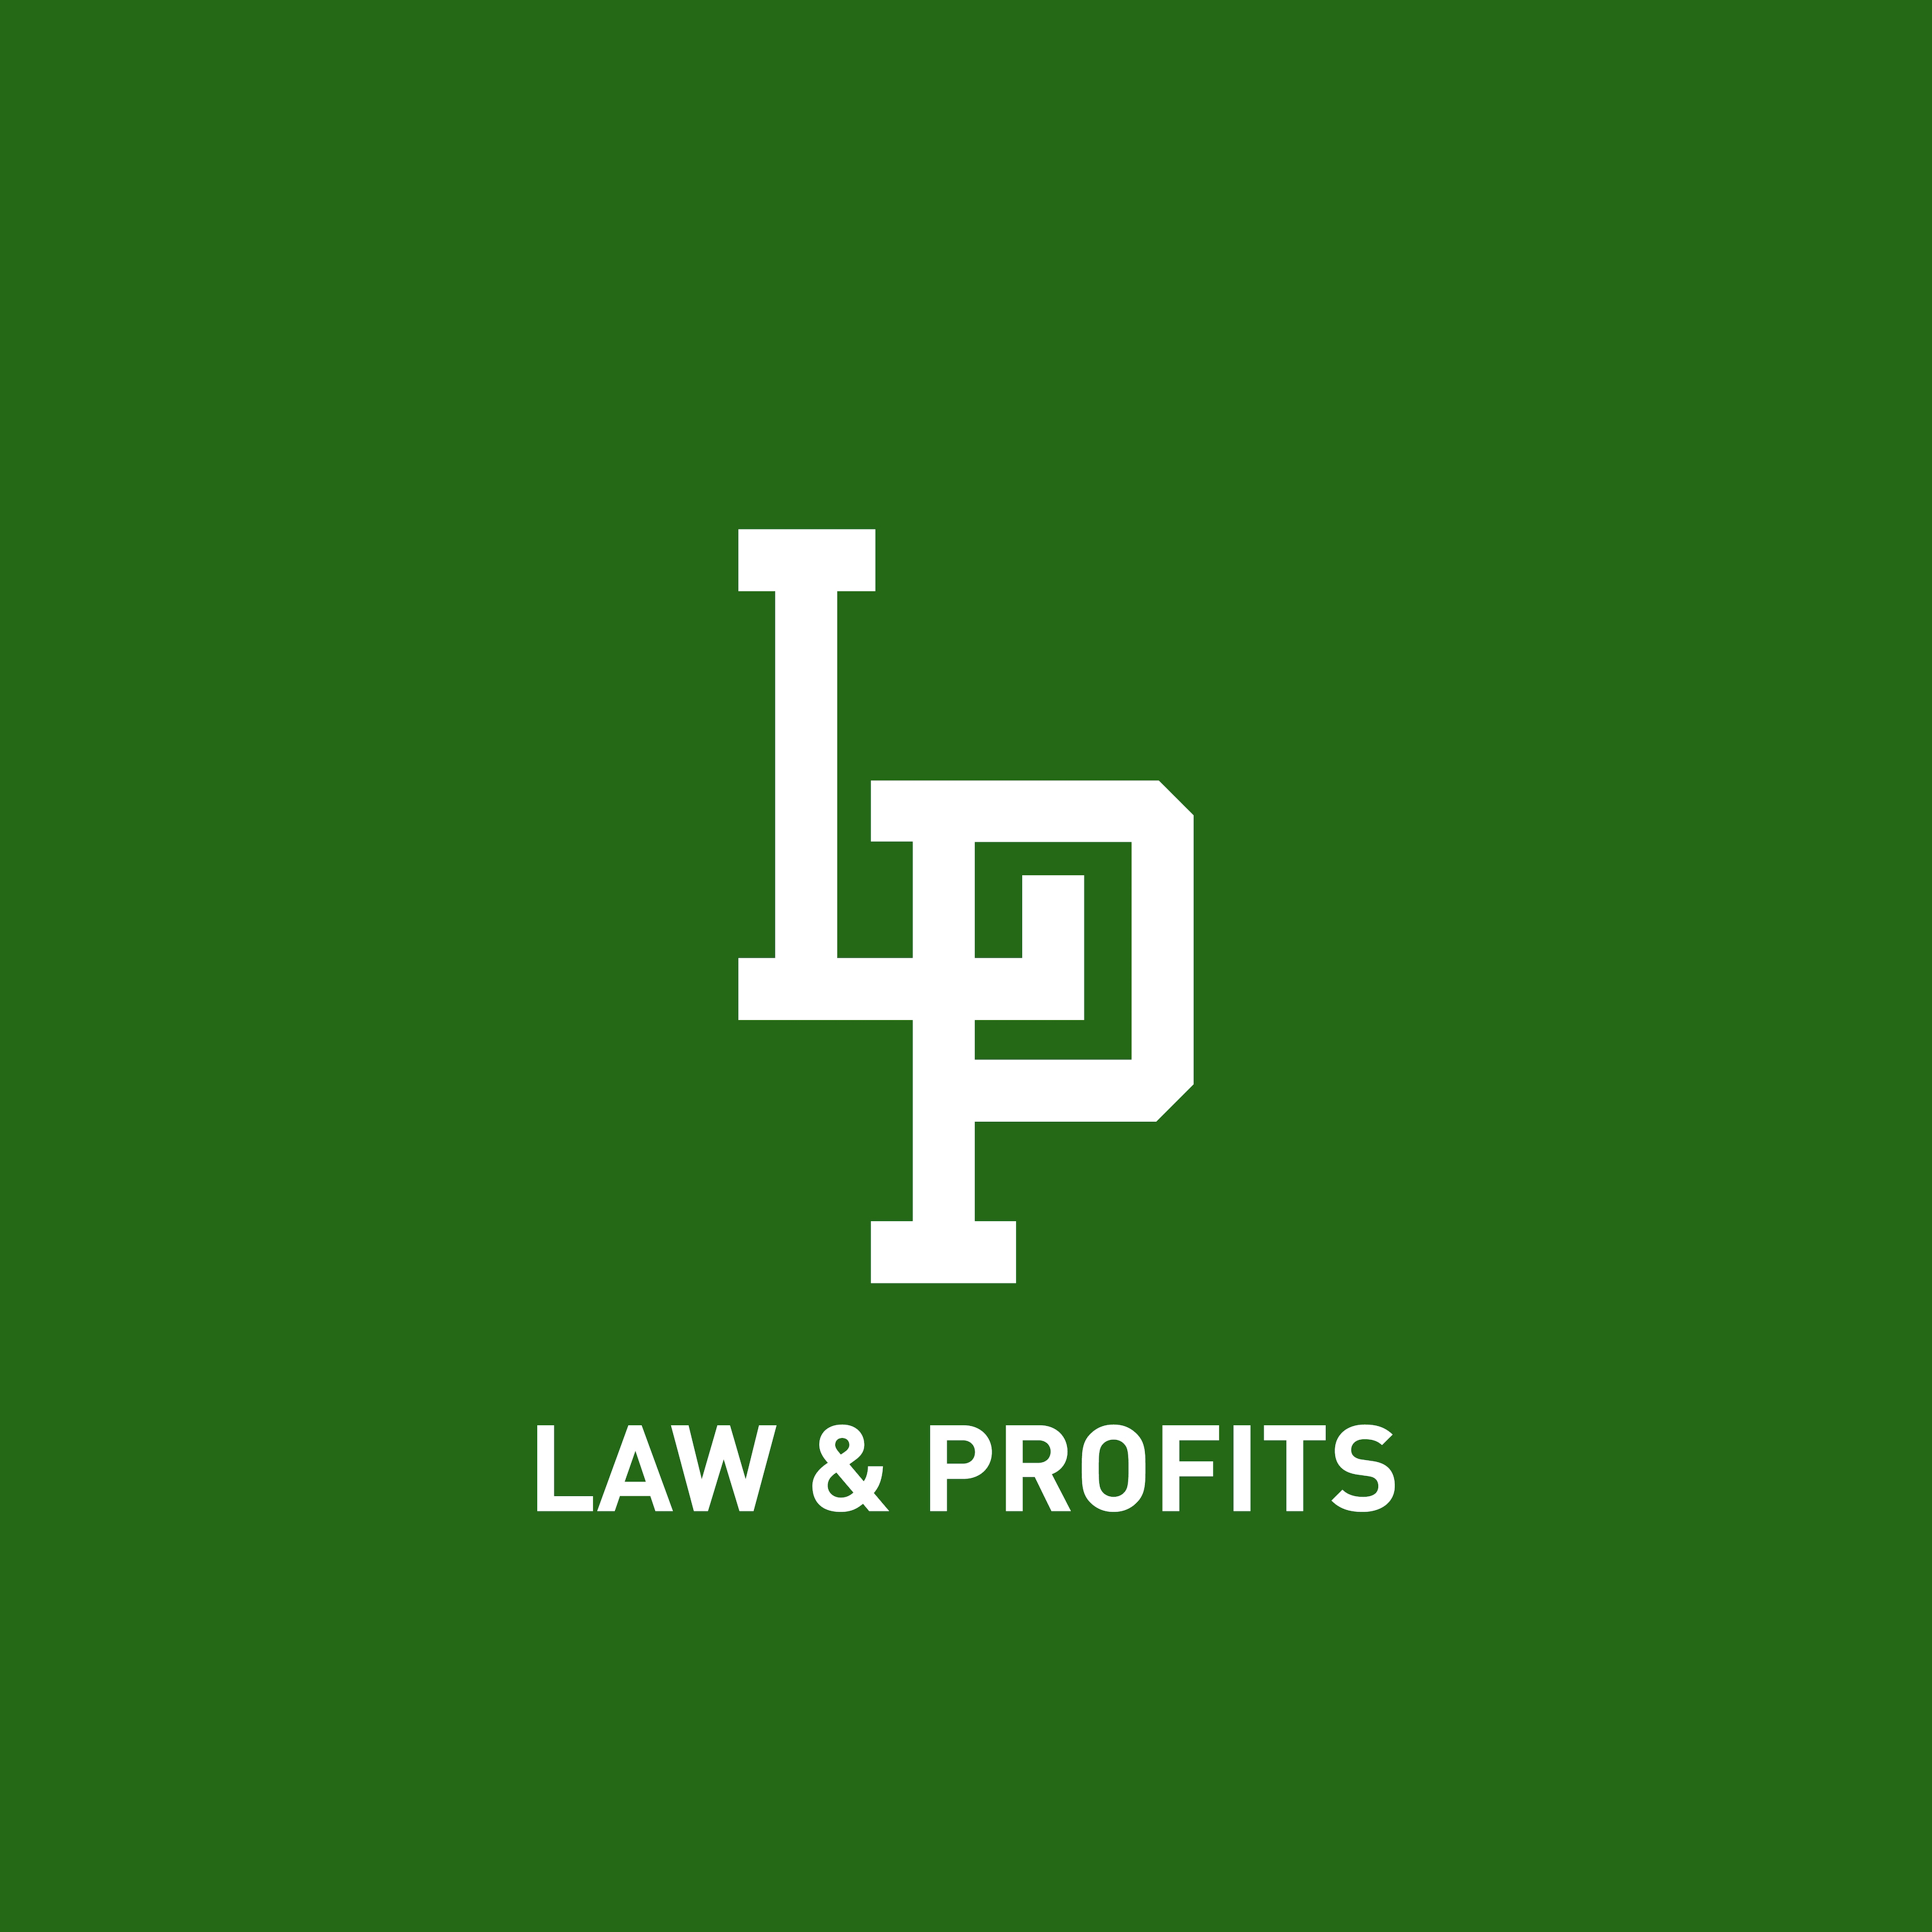 Law and Profits – John Kasich, No True Pro-Lifer.